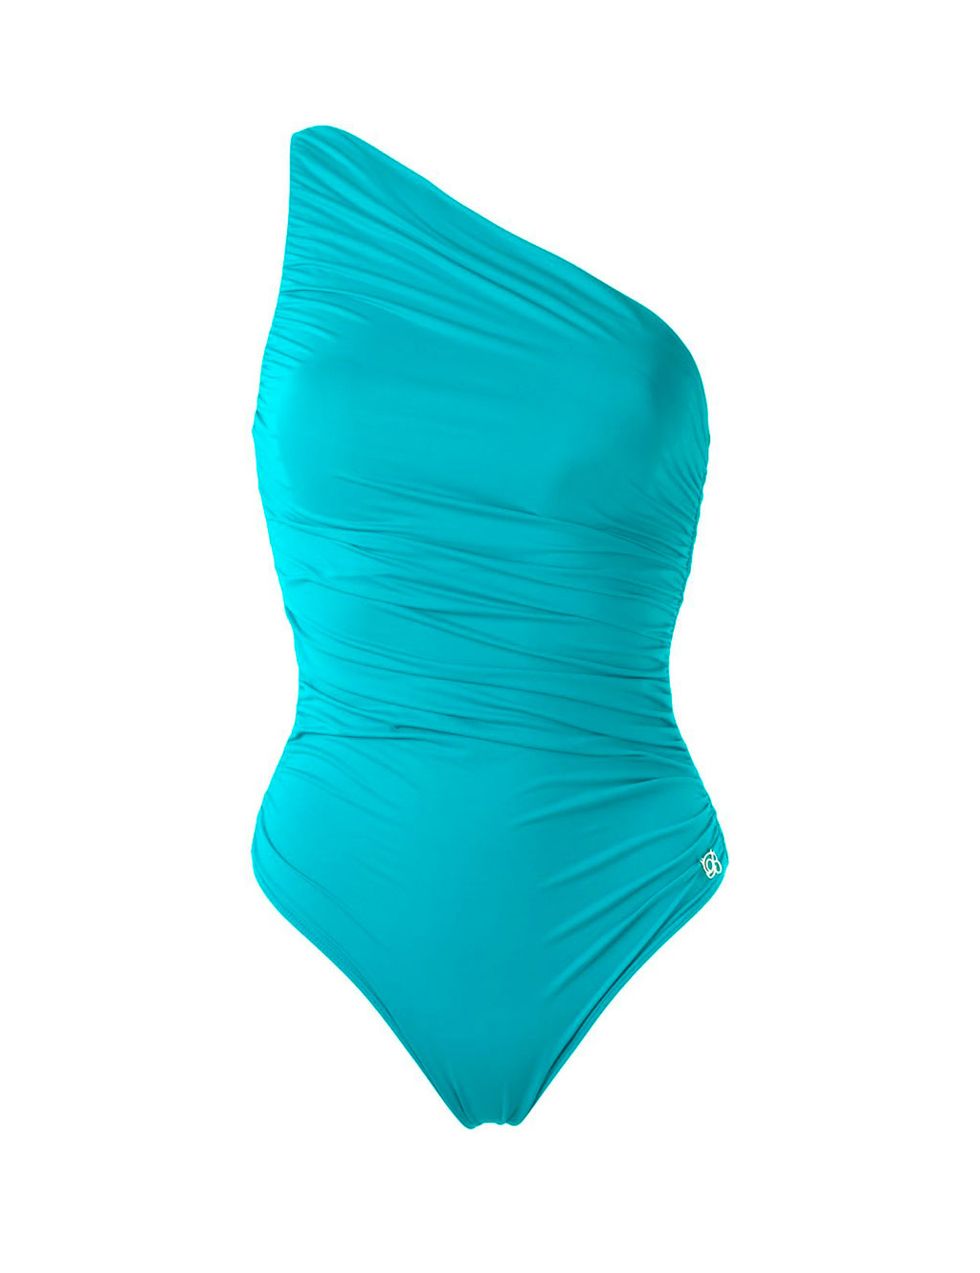 One-piece swimsuit, Swimwear, Clothing, Aqua, Turquoise, Swimsuit bottom, Monokini, Teal, Maillot, Turquoise, 